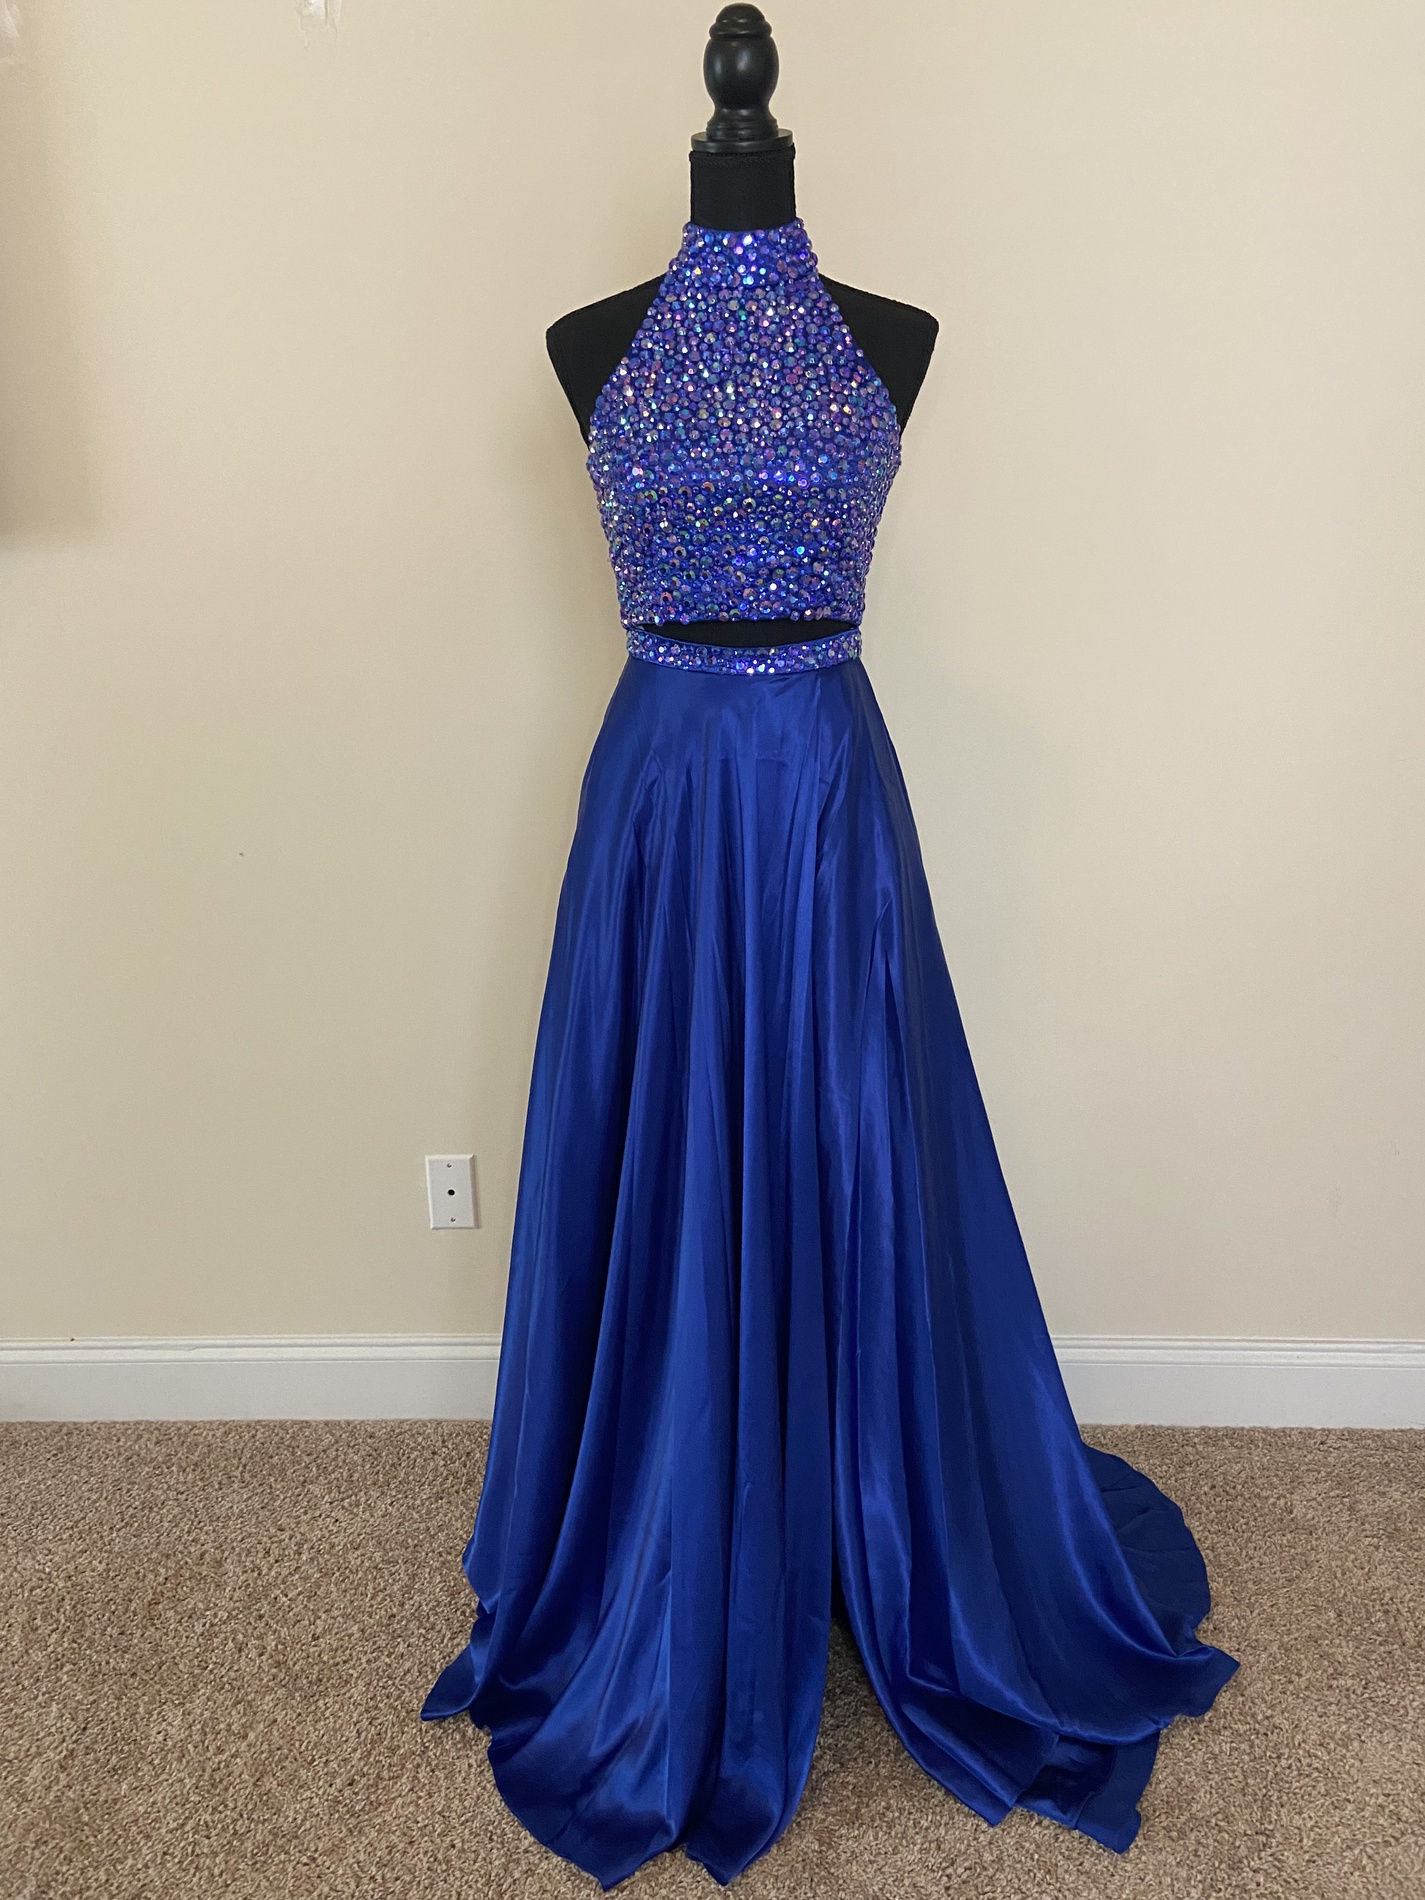 Sherri Hill Size 0 Prom Halter Royal Blue Side Slit Dress on Queenly